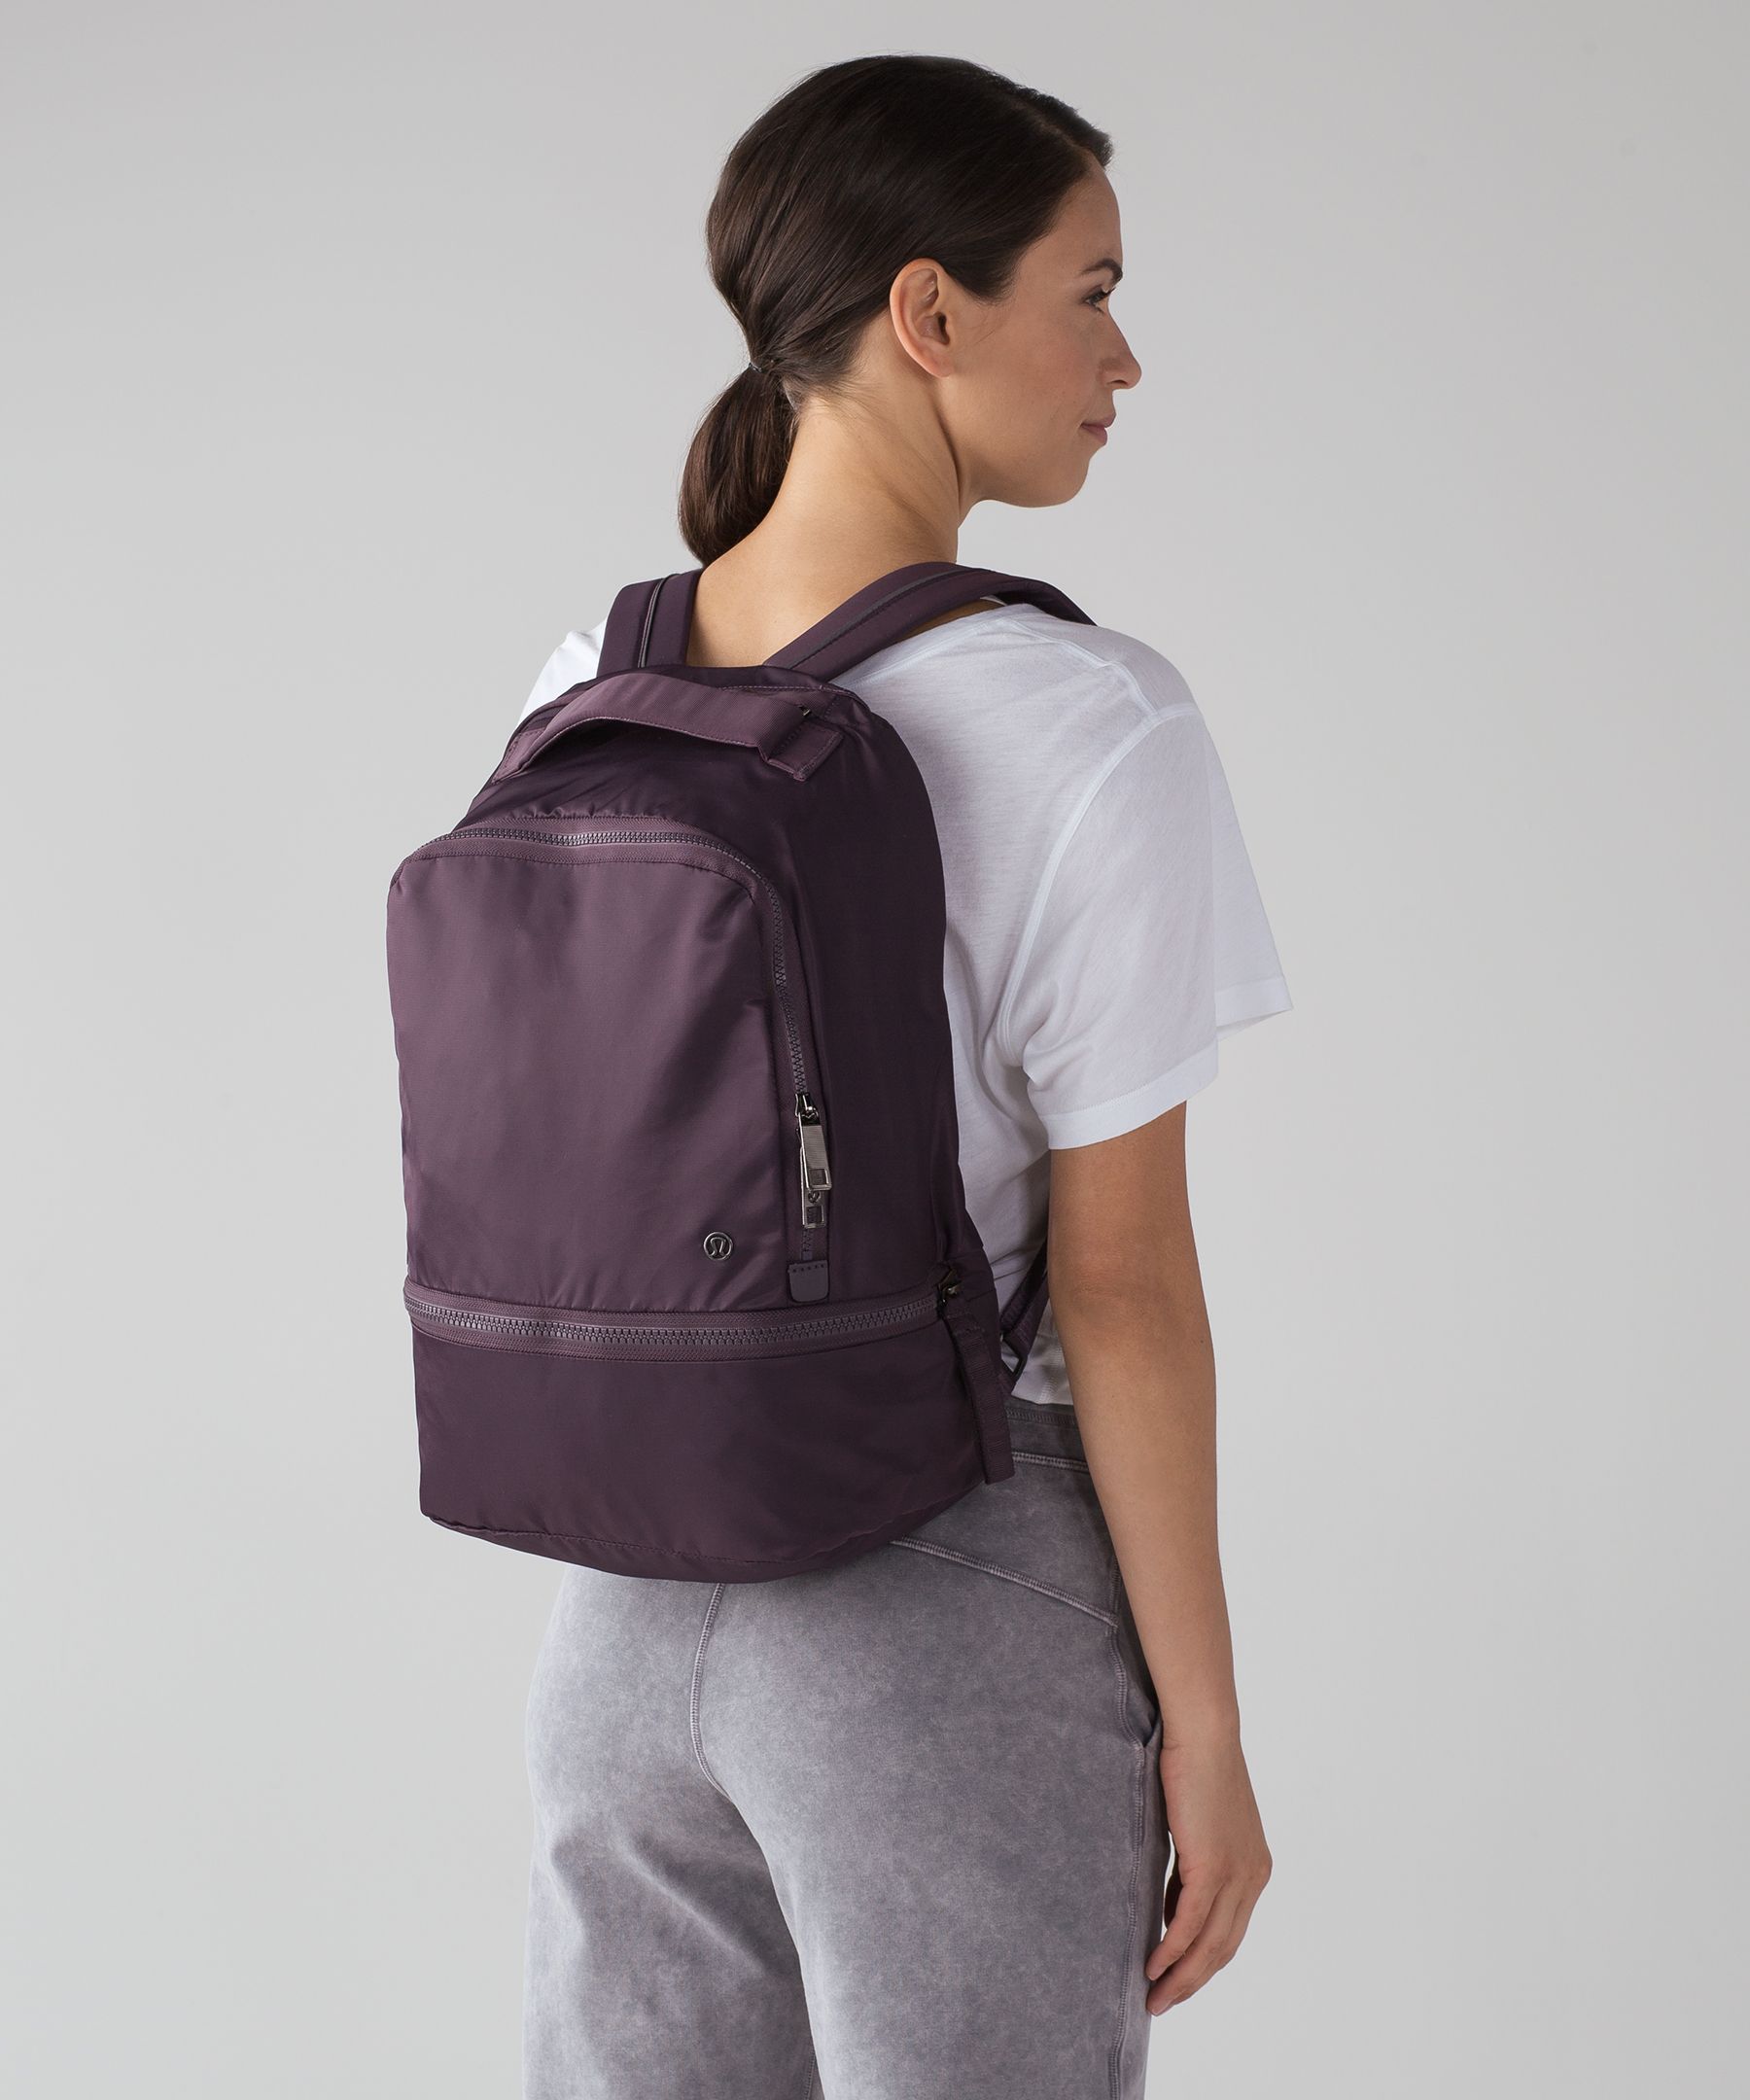 lululemon backpack as diaper bag